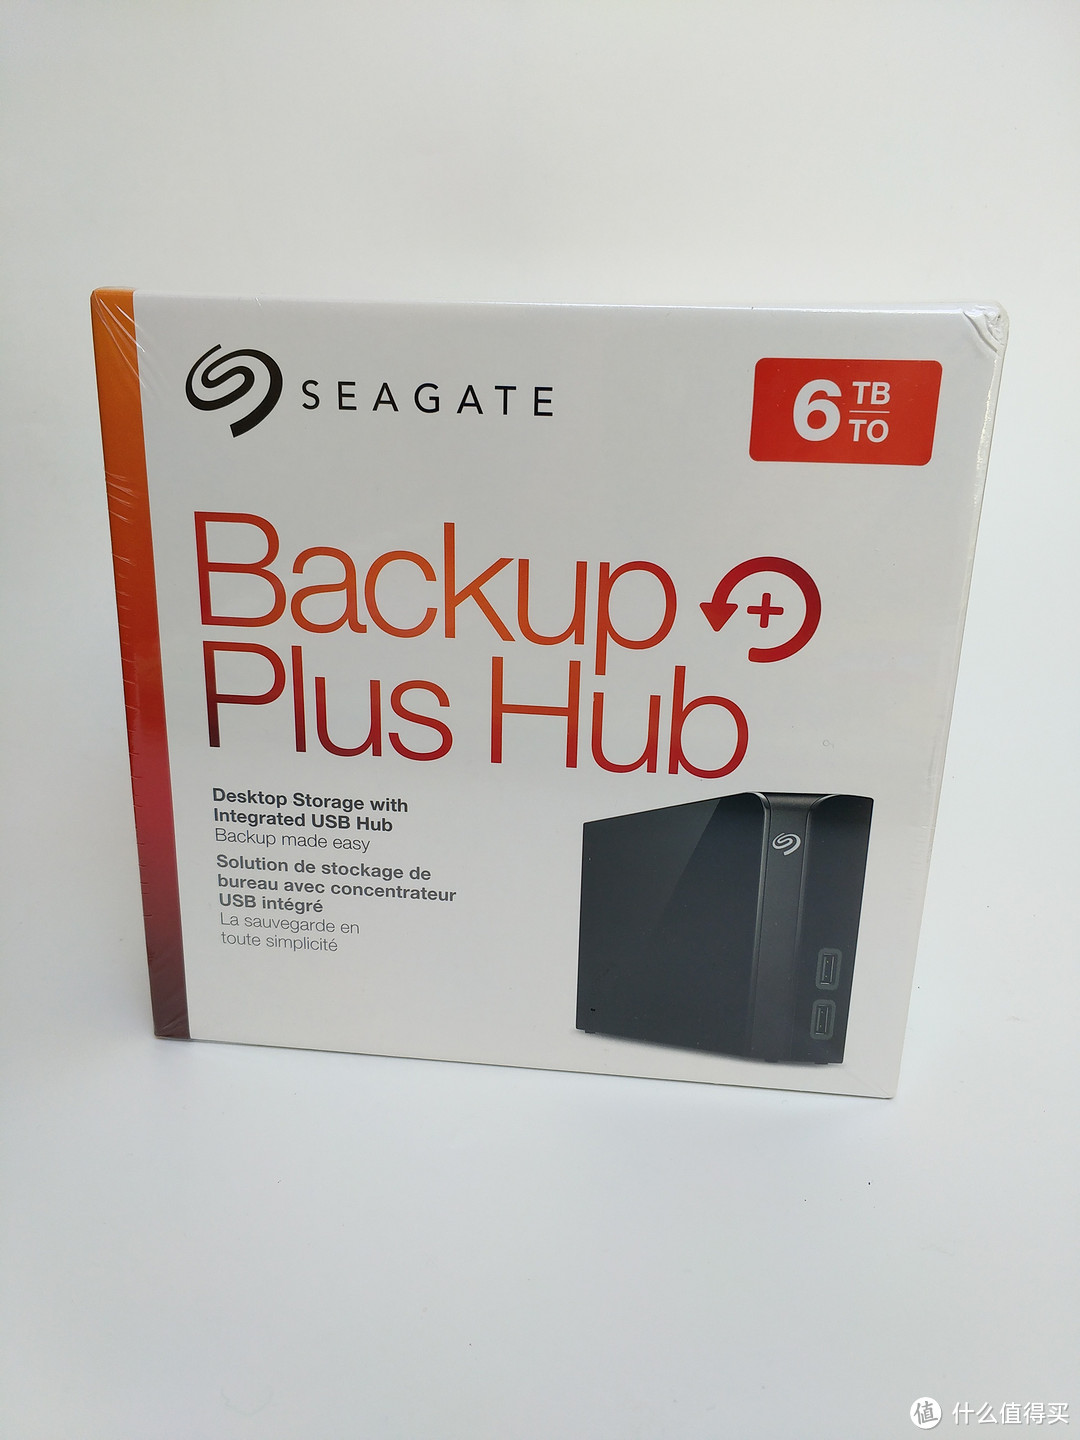 希捷 Backup Plus Hub 睿品6T 3.5英寸 USB3.0扩展